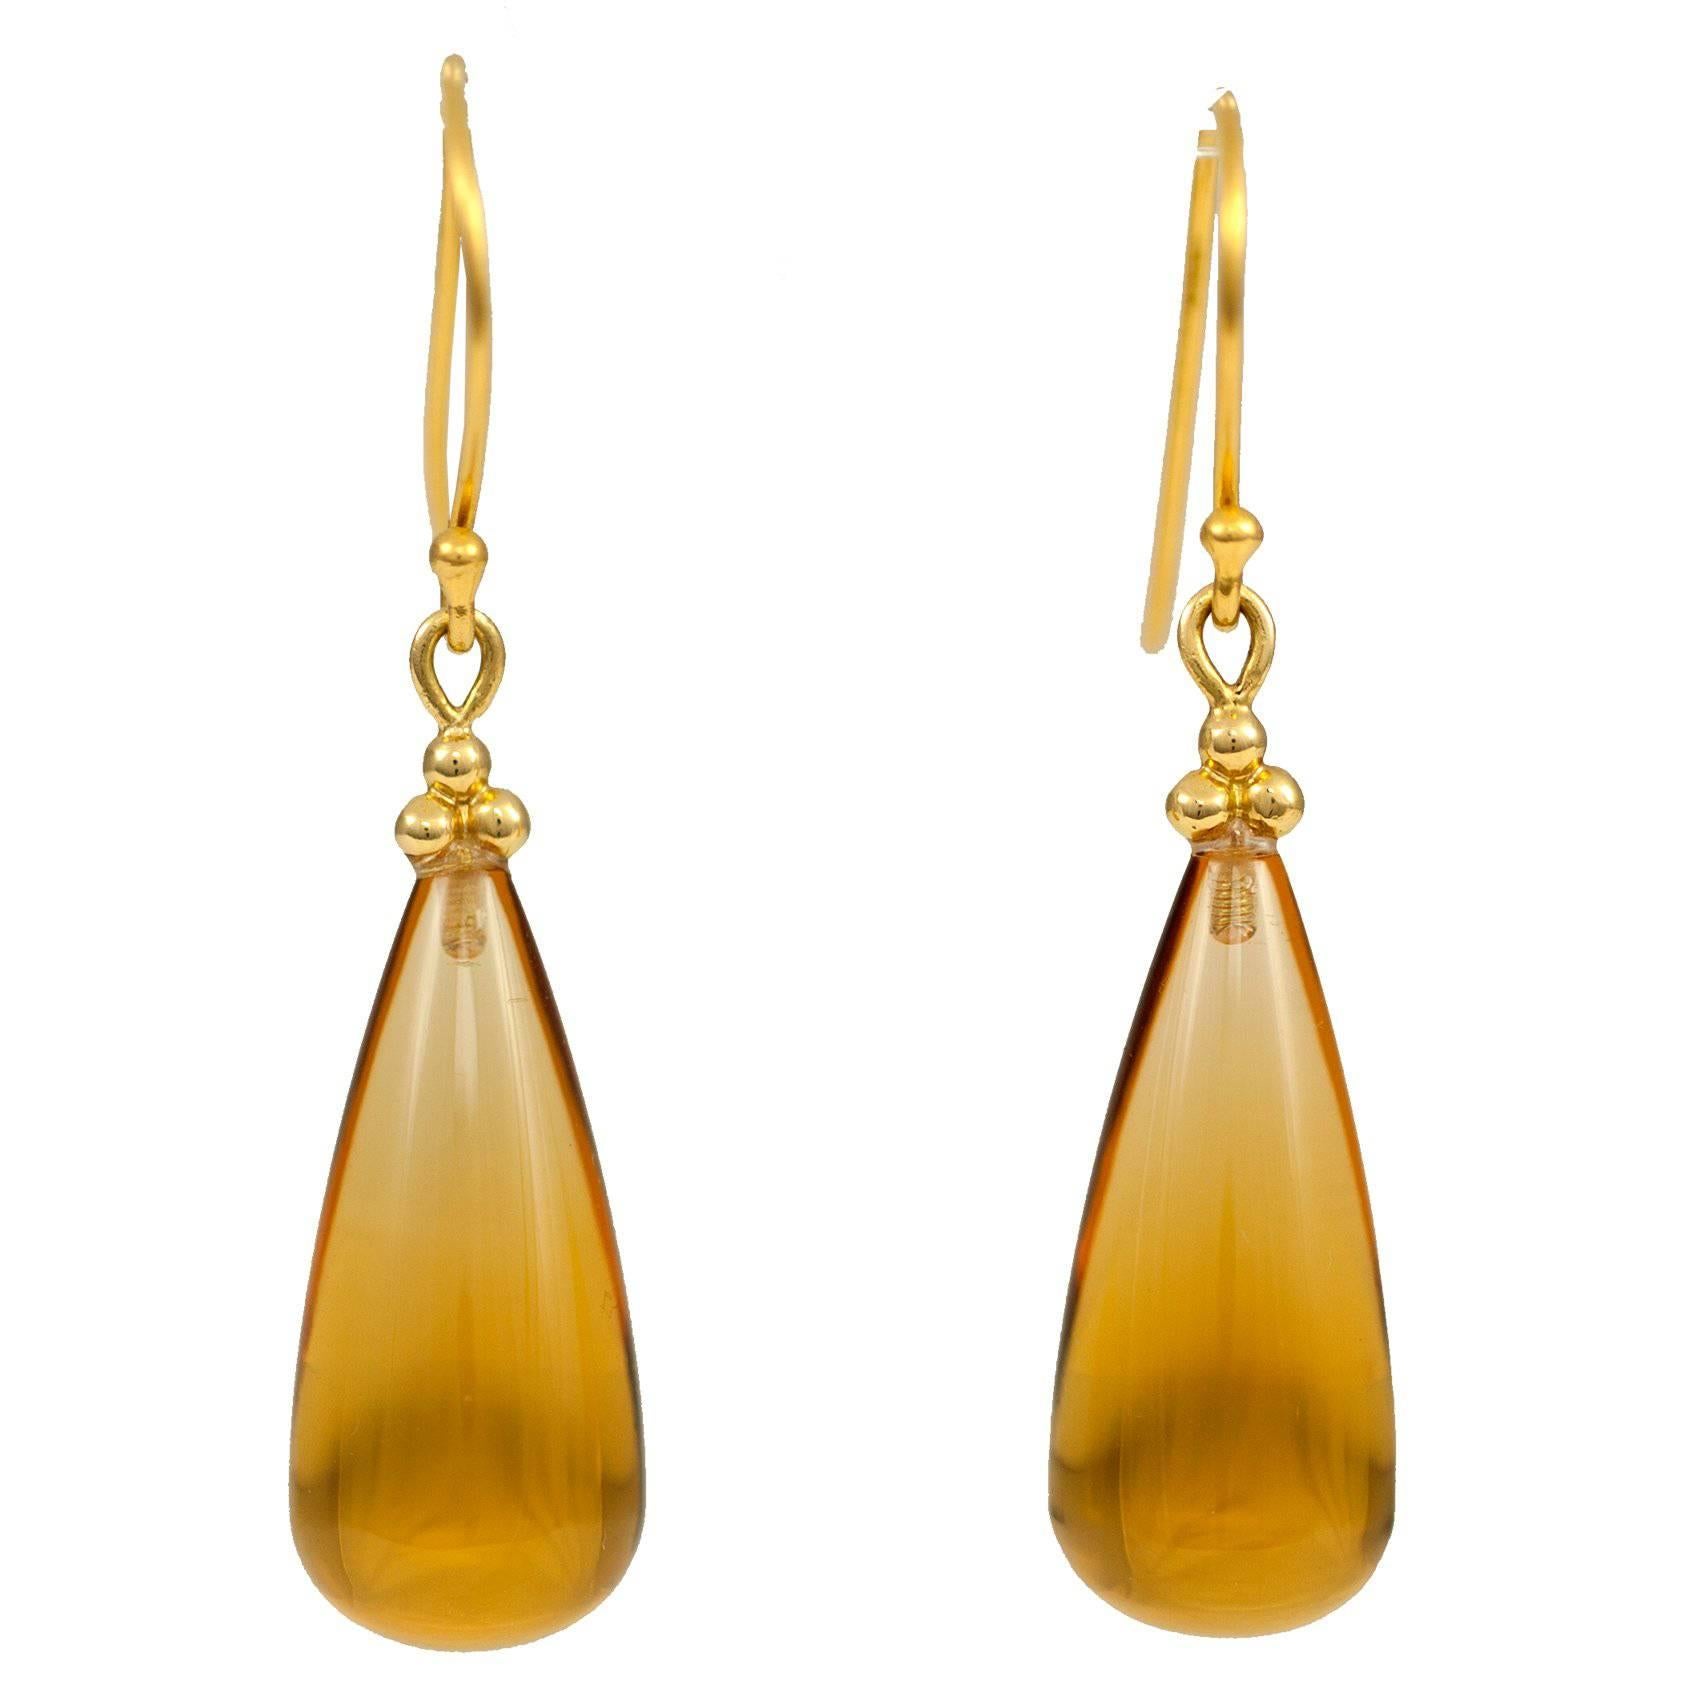 Crevoshay Citrine Earrings in 18 Karat Yellow Gold For Sale